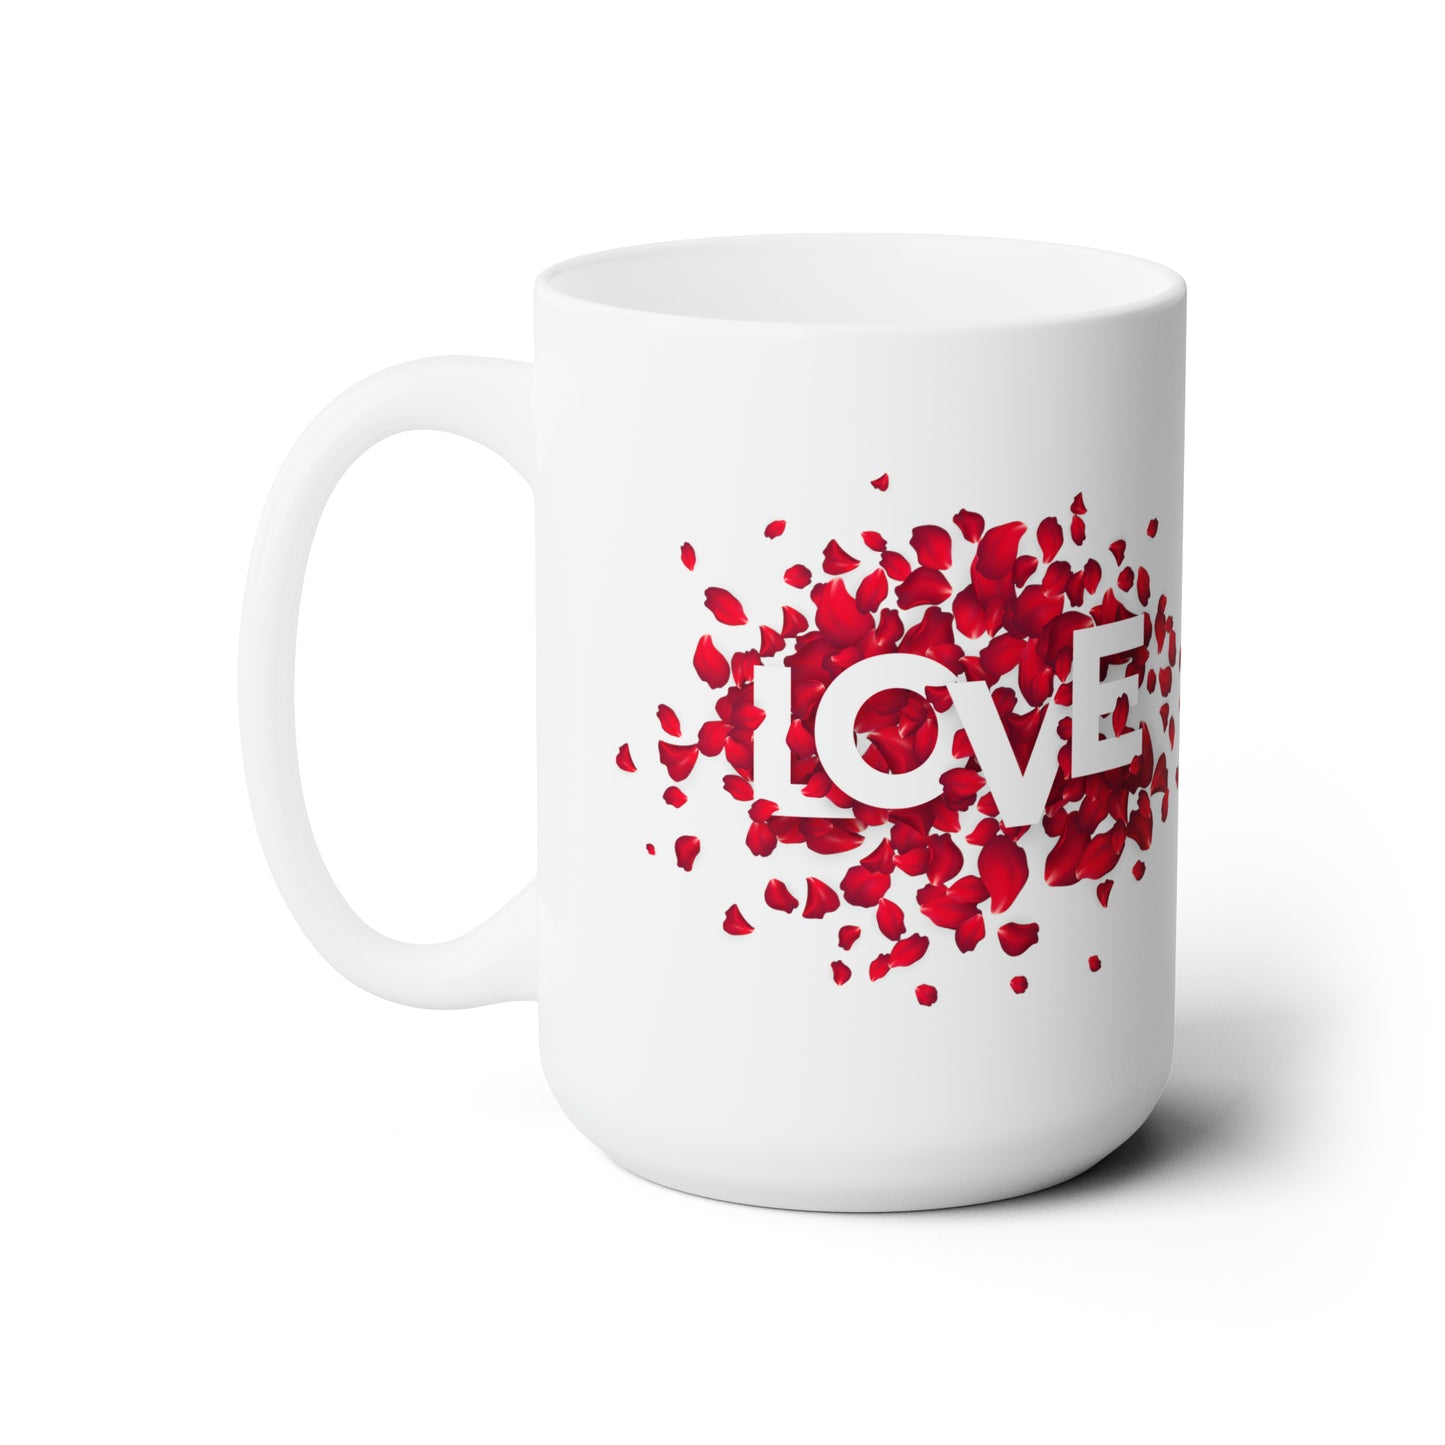 Love with Heart made of Flower Printed Ceramic Valentine Mug, 15oz